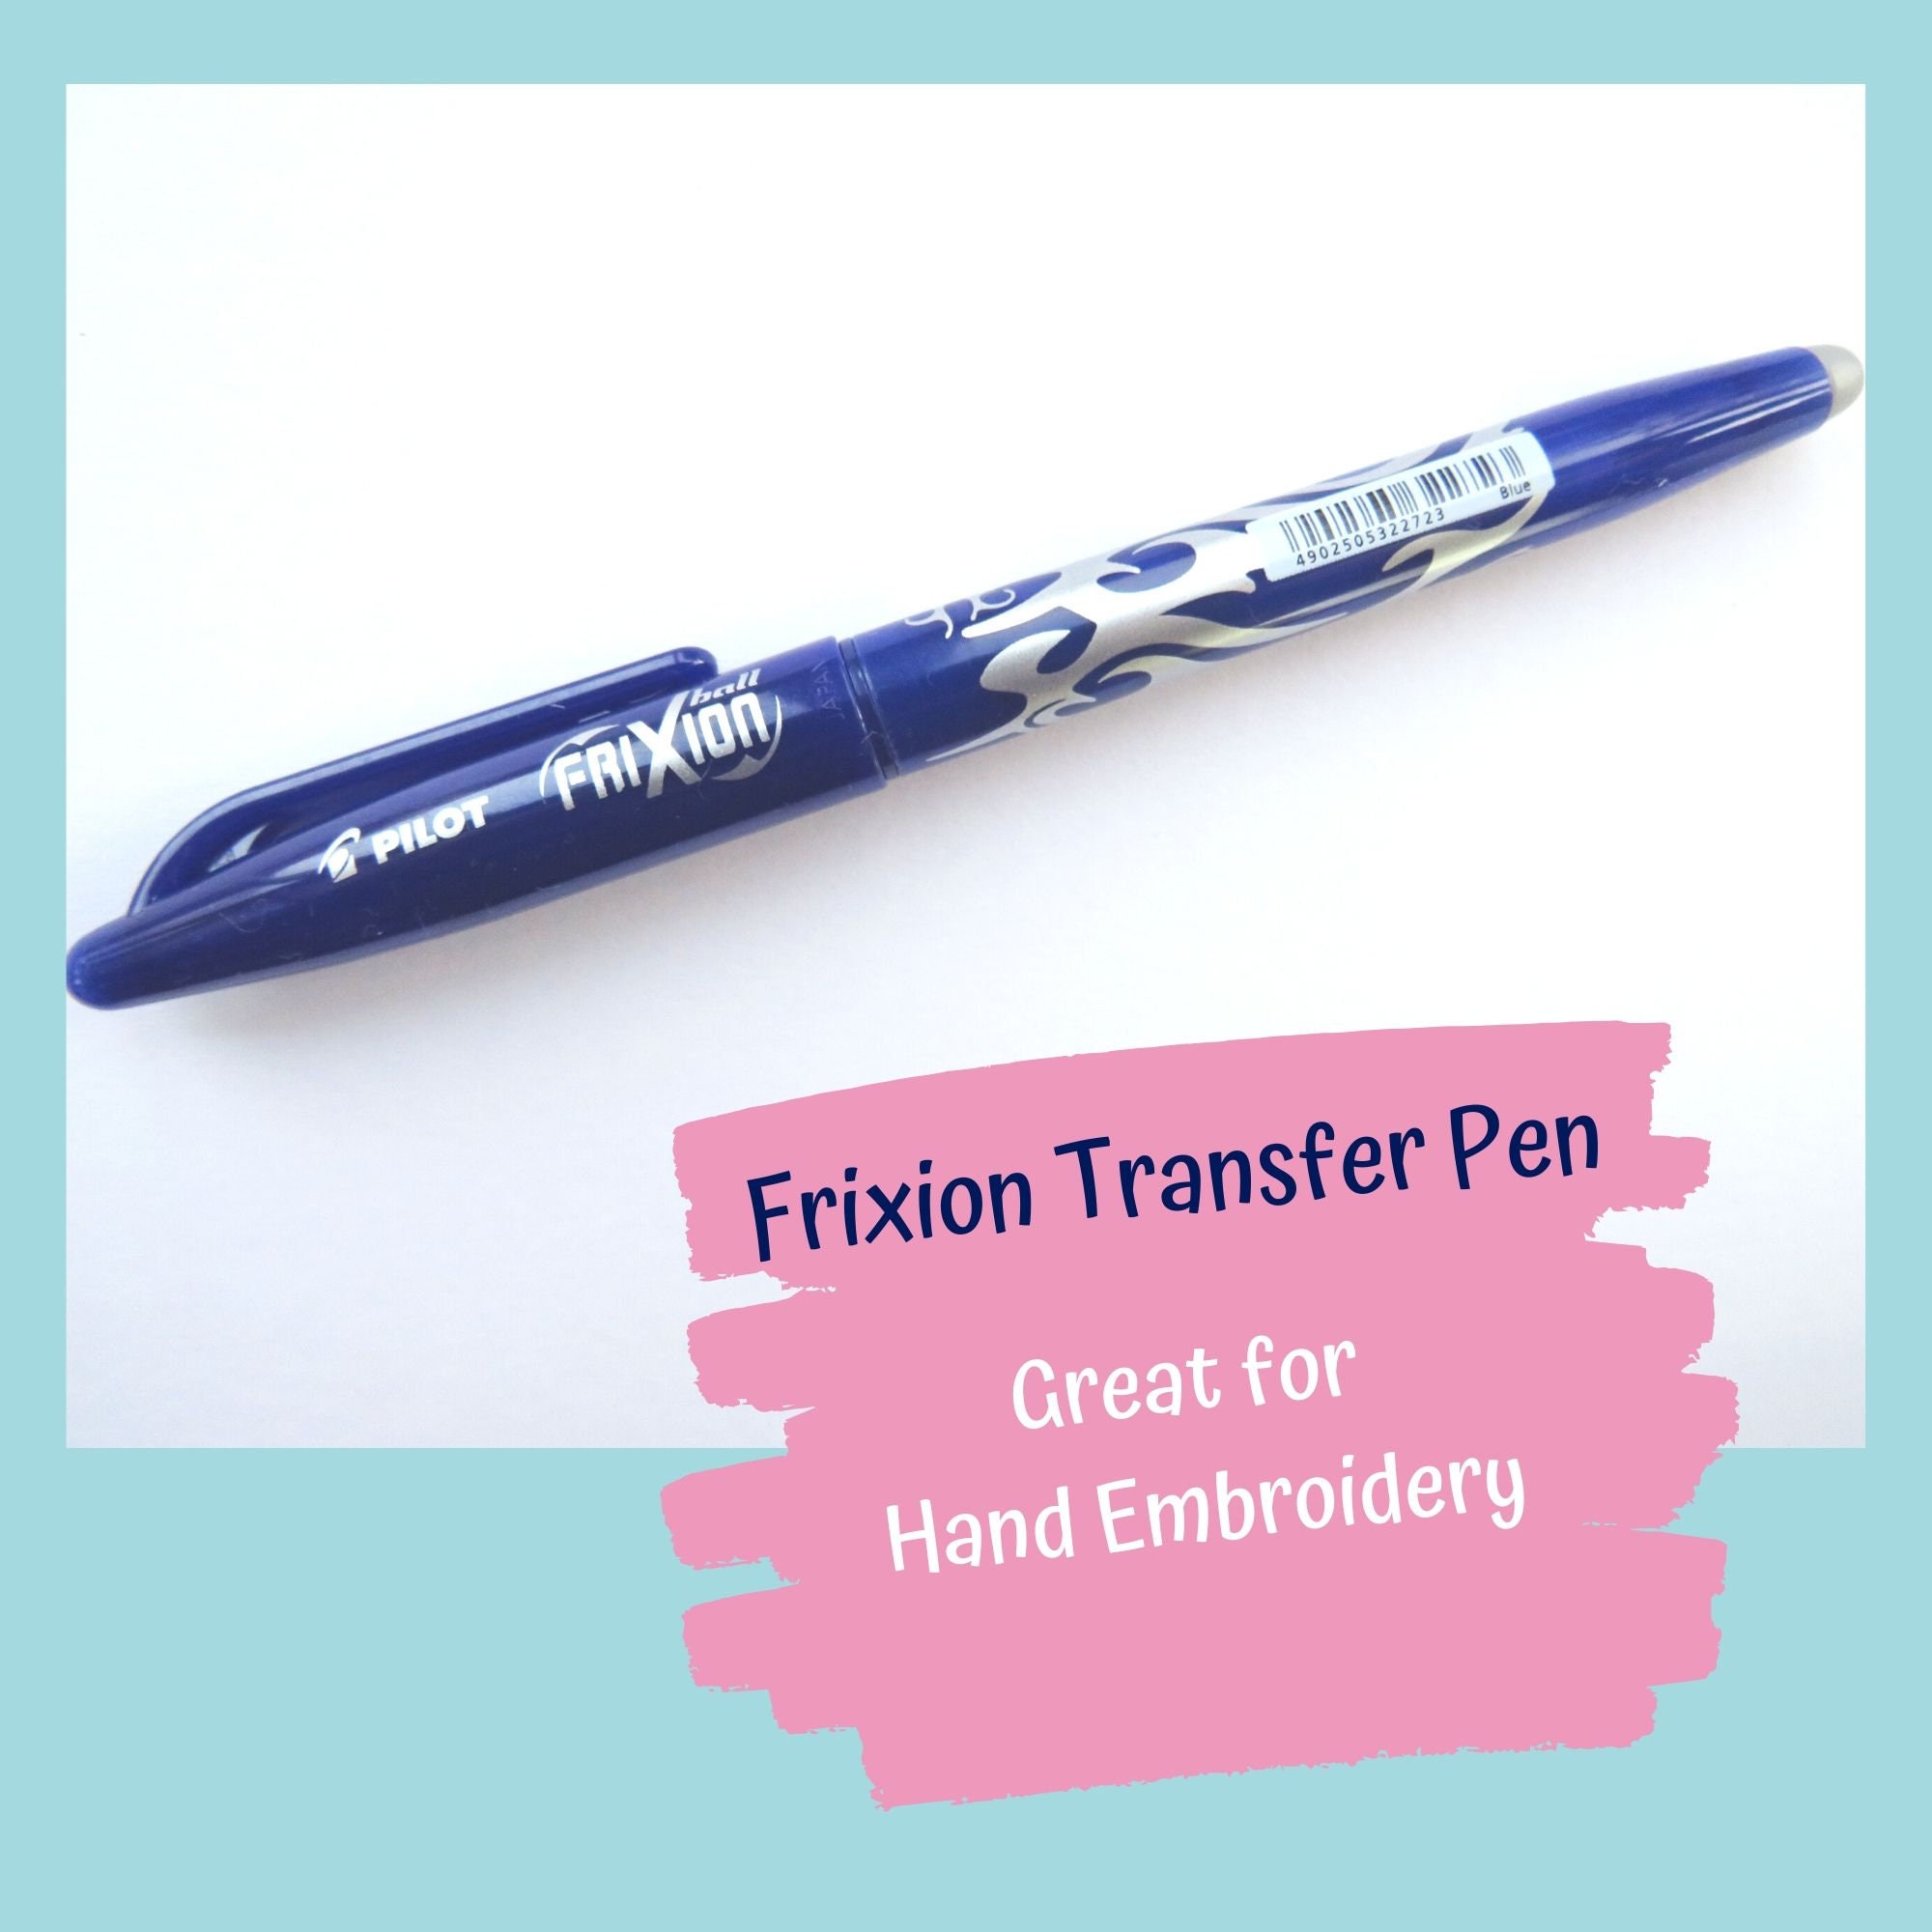 Heat Erasable Pen, Fabric Heat Erasable Pen, Hand Embroidery